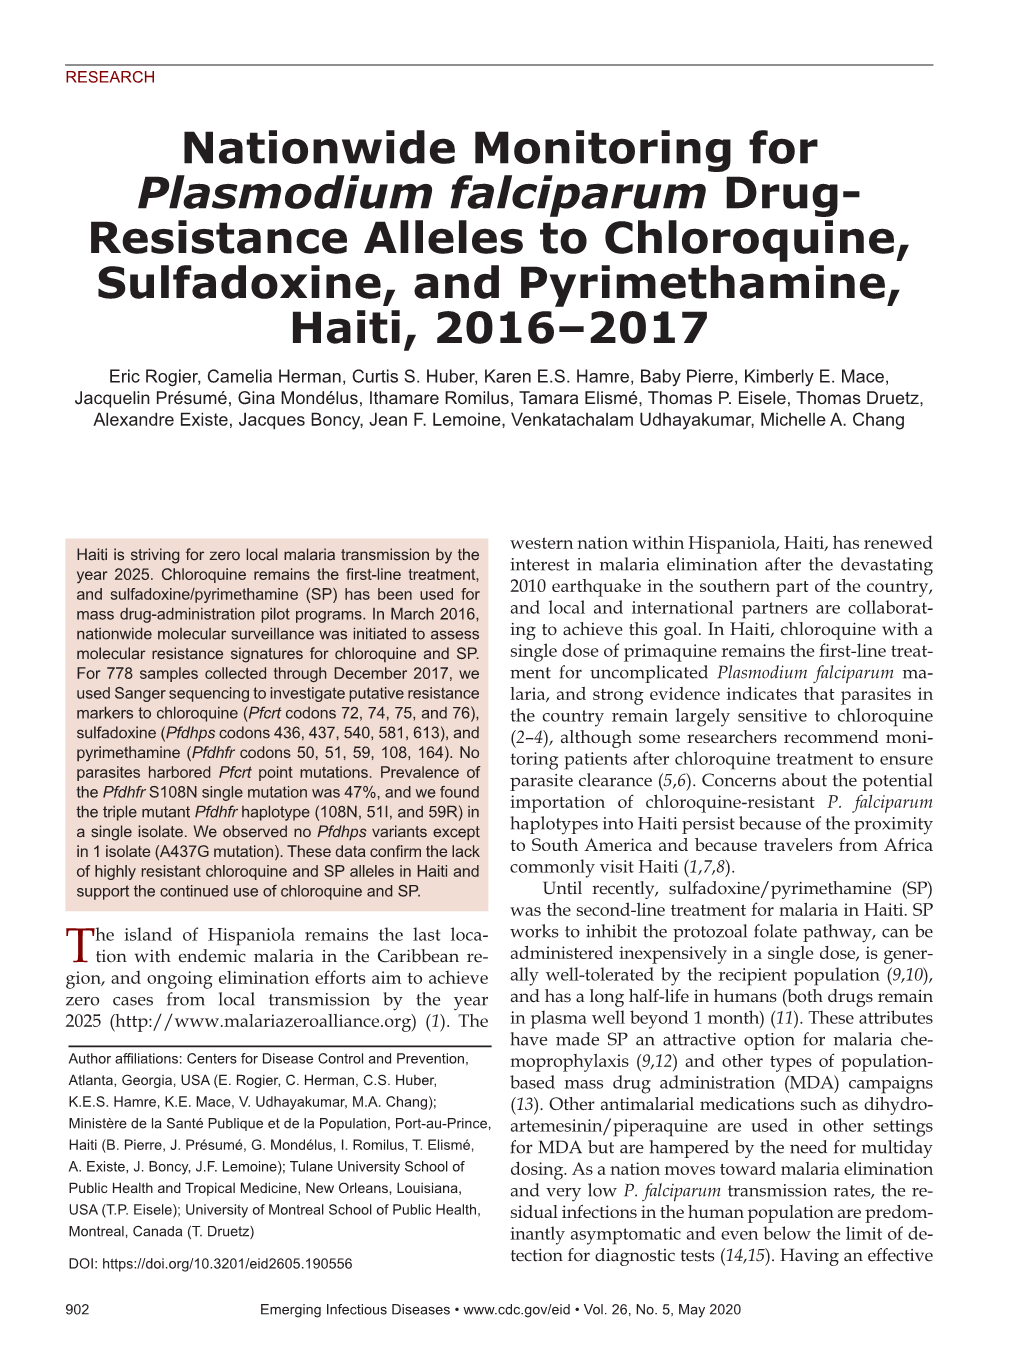 Nationwide Monitoring for Plasmodium Falciparum Drug